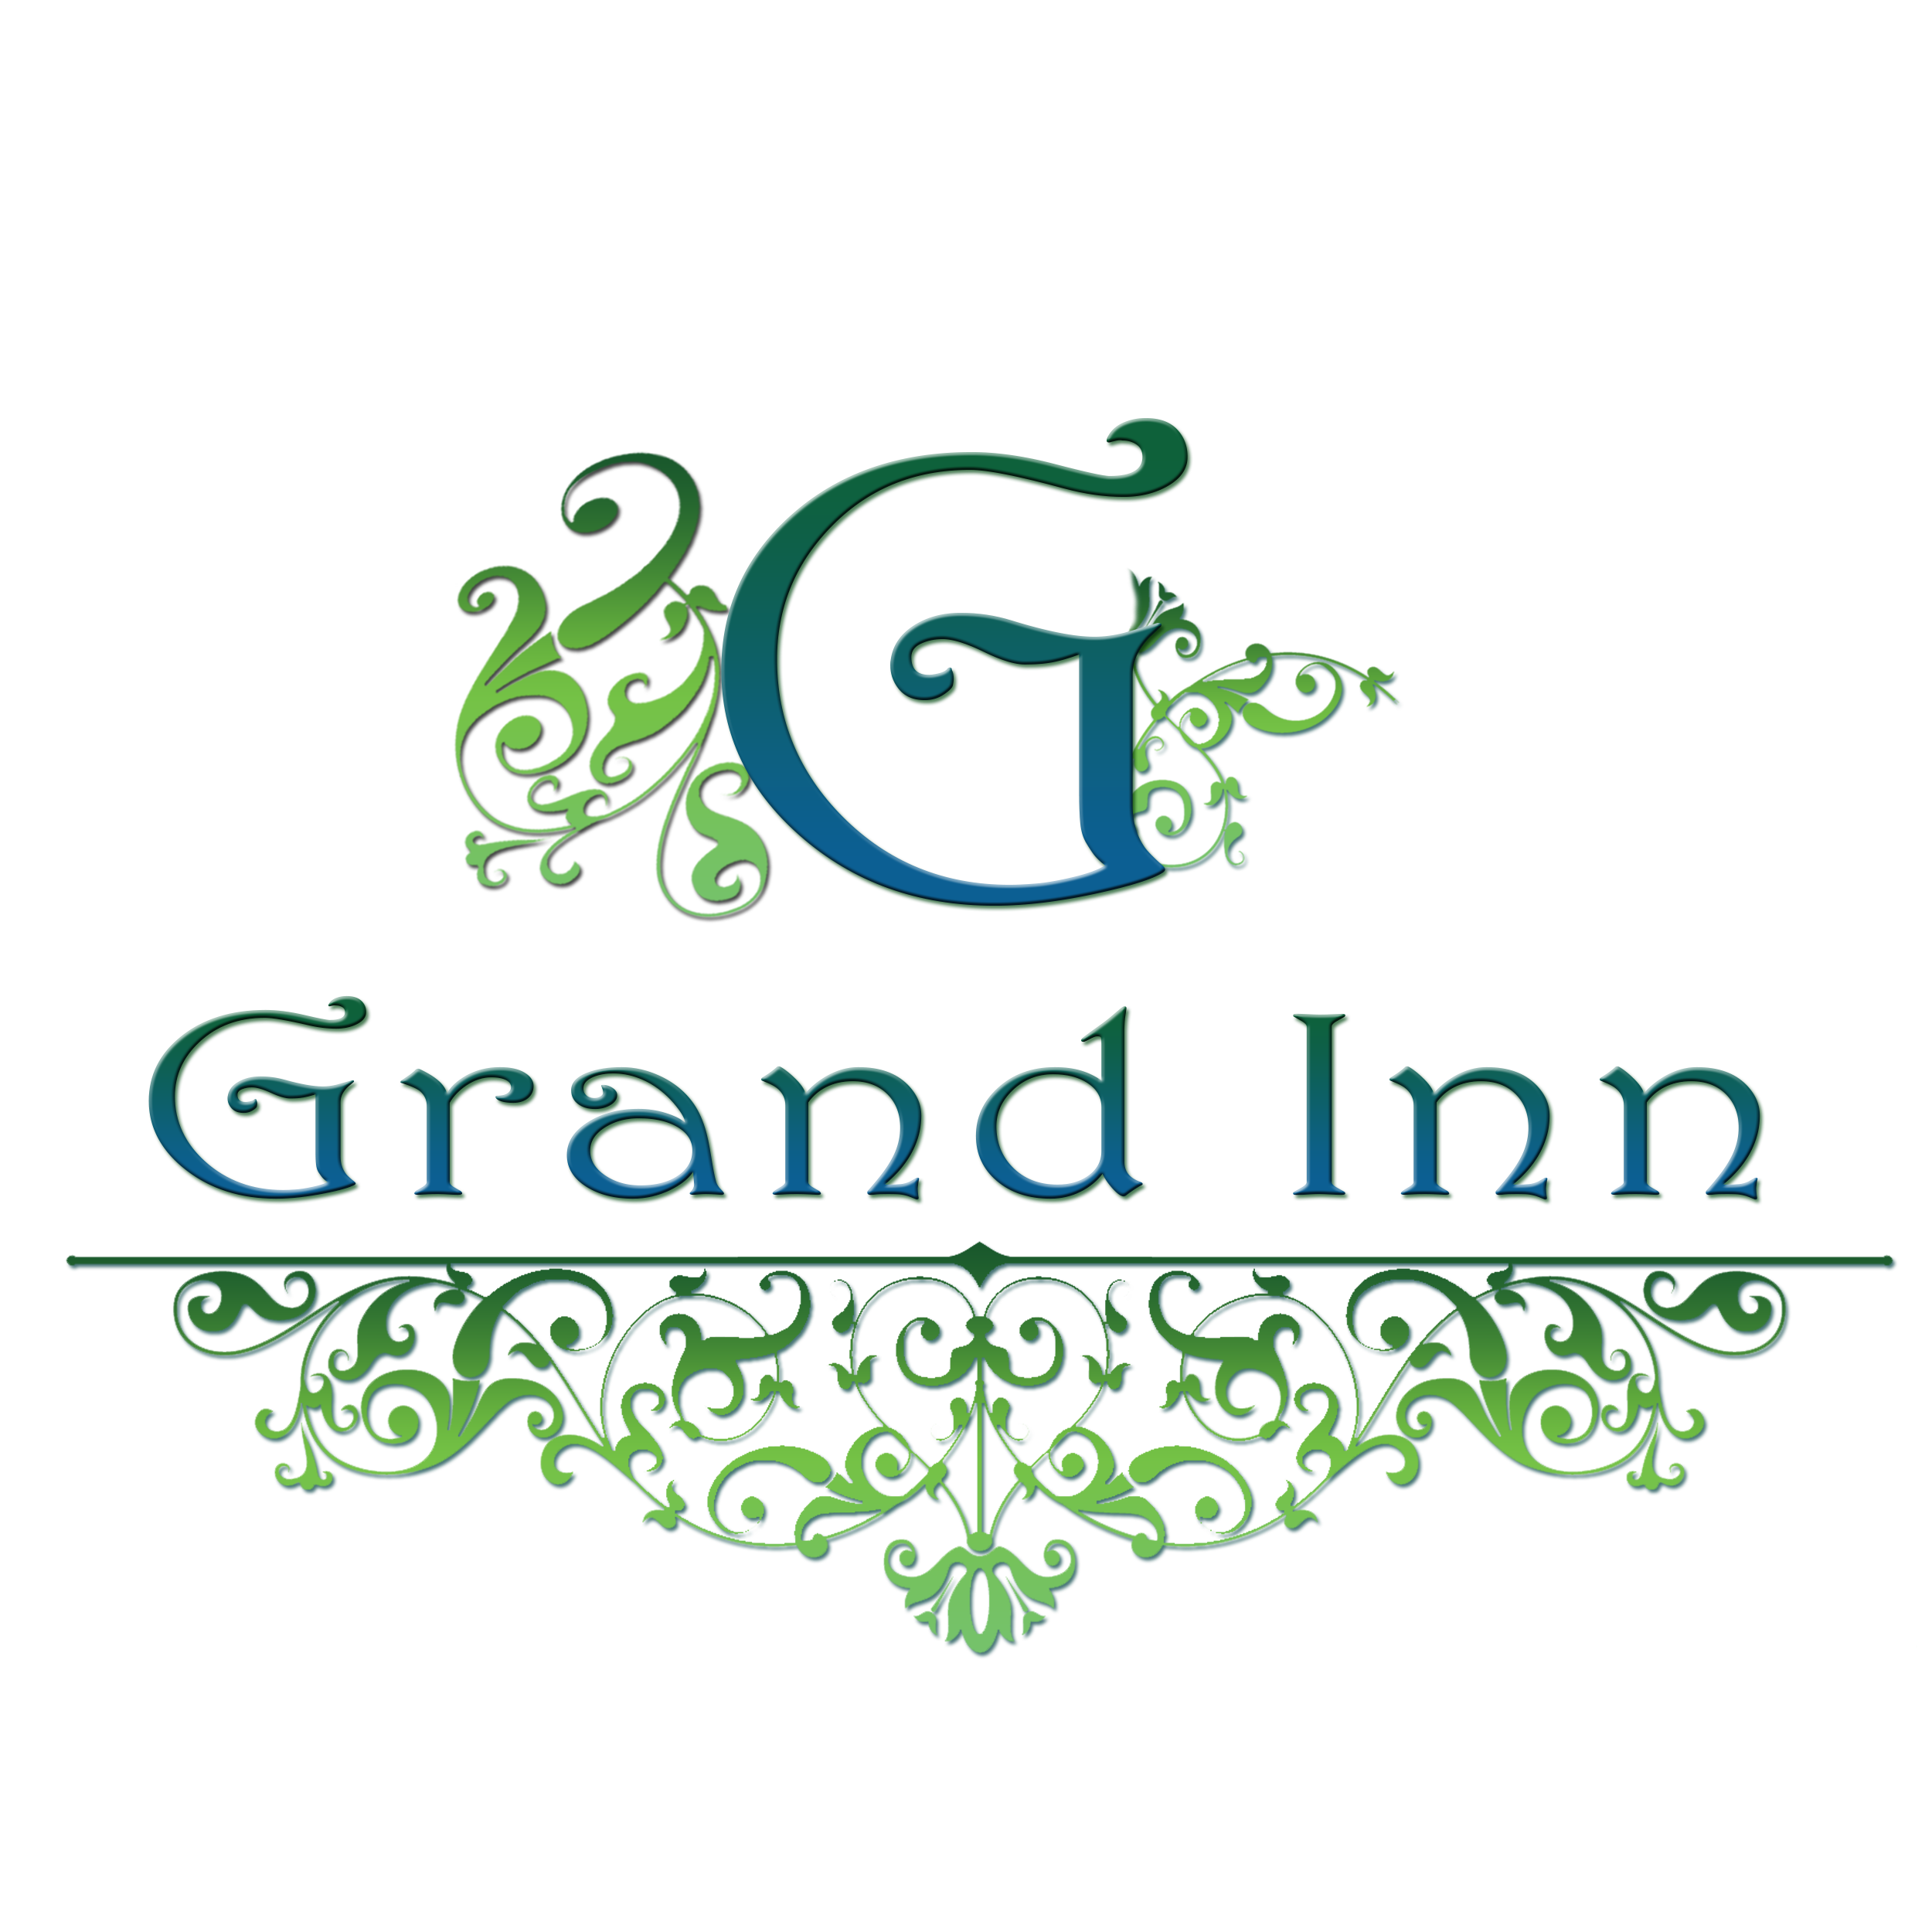 Grand Inn